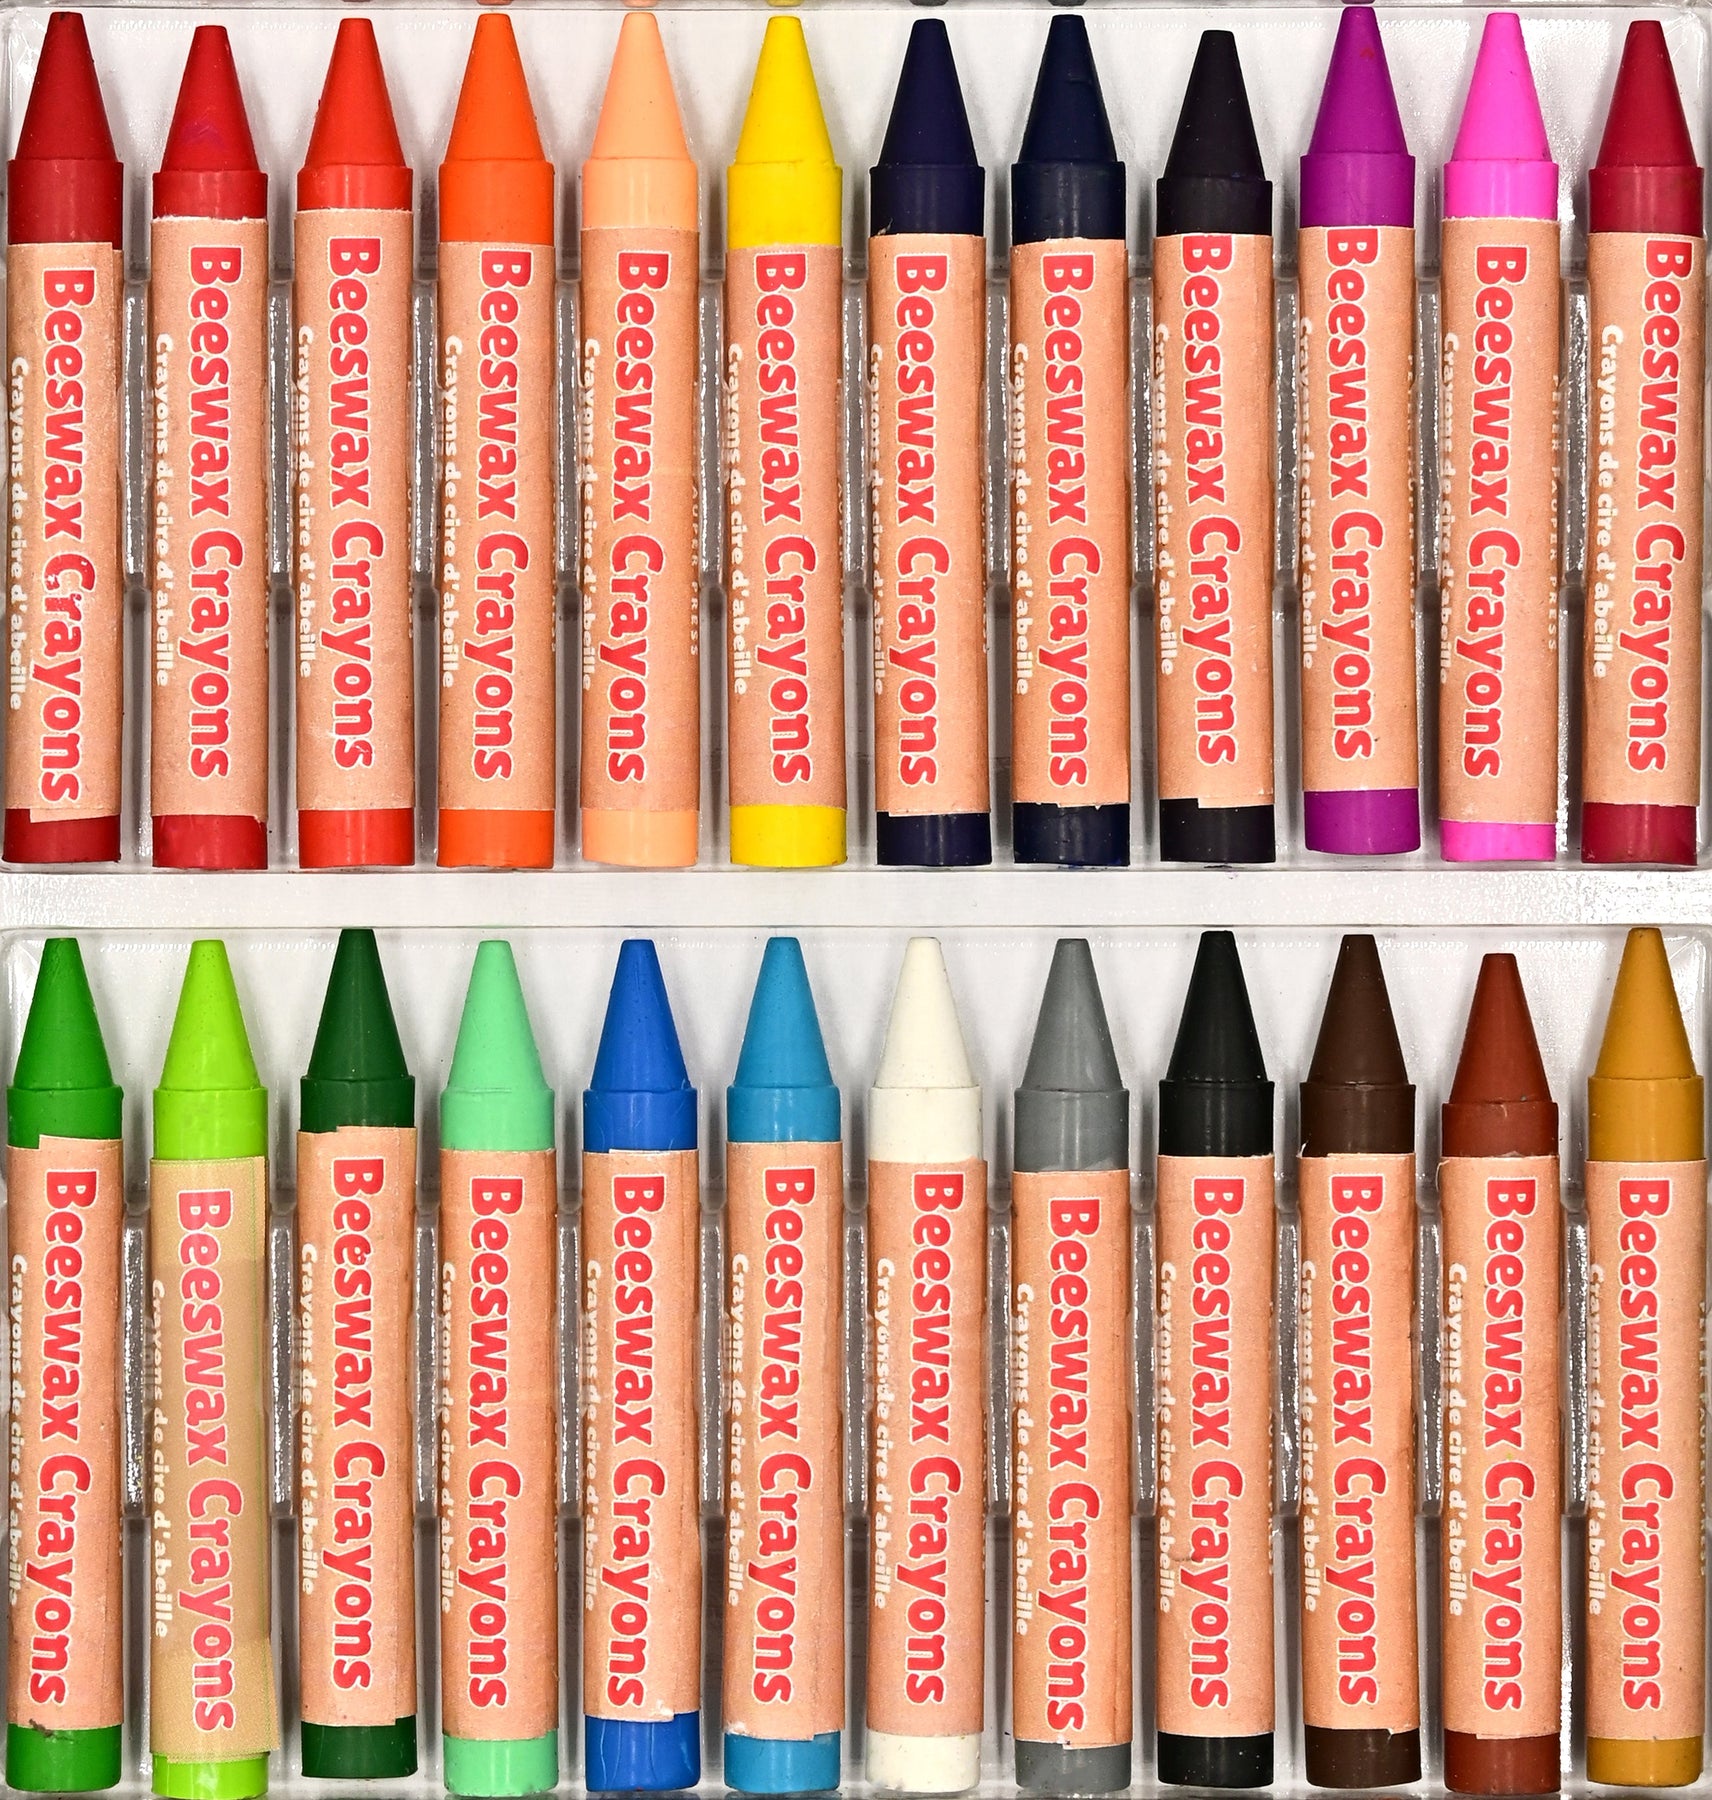 Beeswax Crayons - Unicorns - 6 Color Set - Chickadee Art Collective